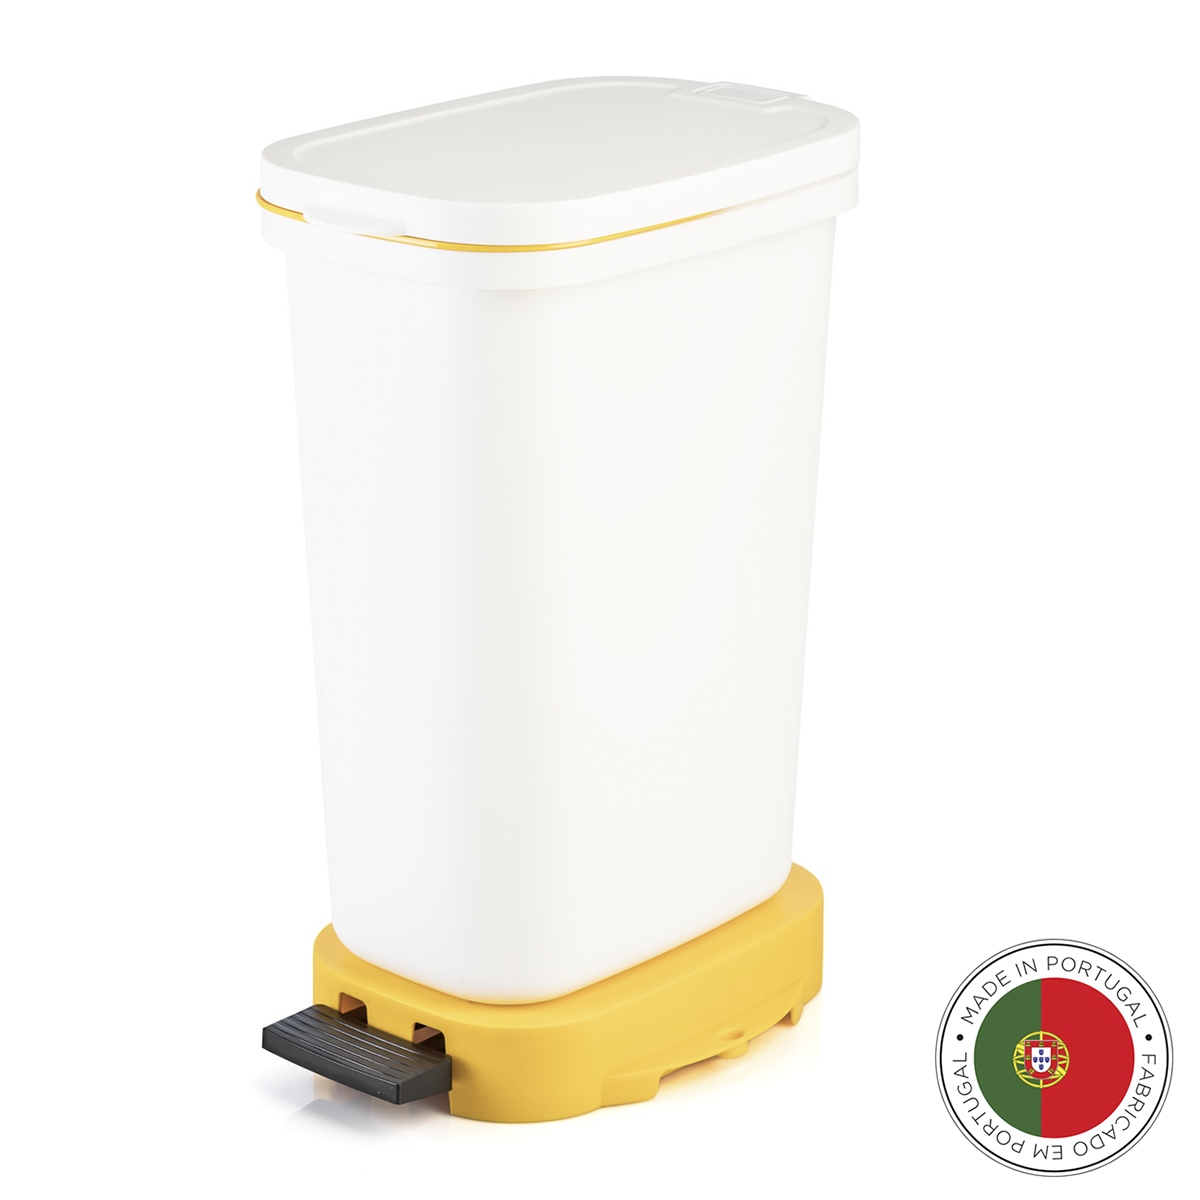 Мусорный бак с педалью BE-ECO white yellow, 26х36 см, 50 см, 20 л, Пластик, Faplana, Португалия